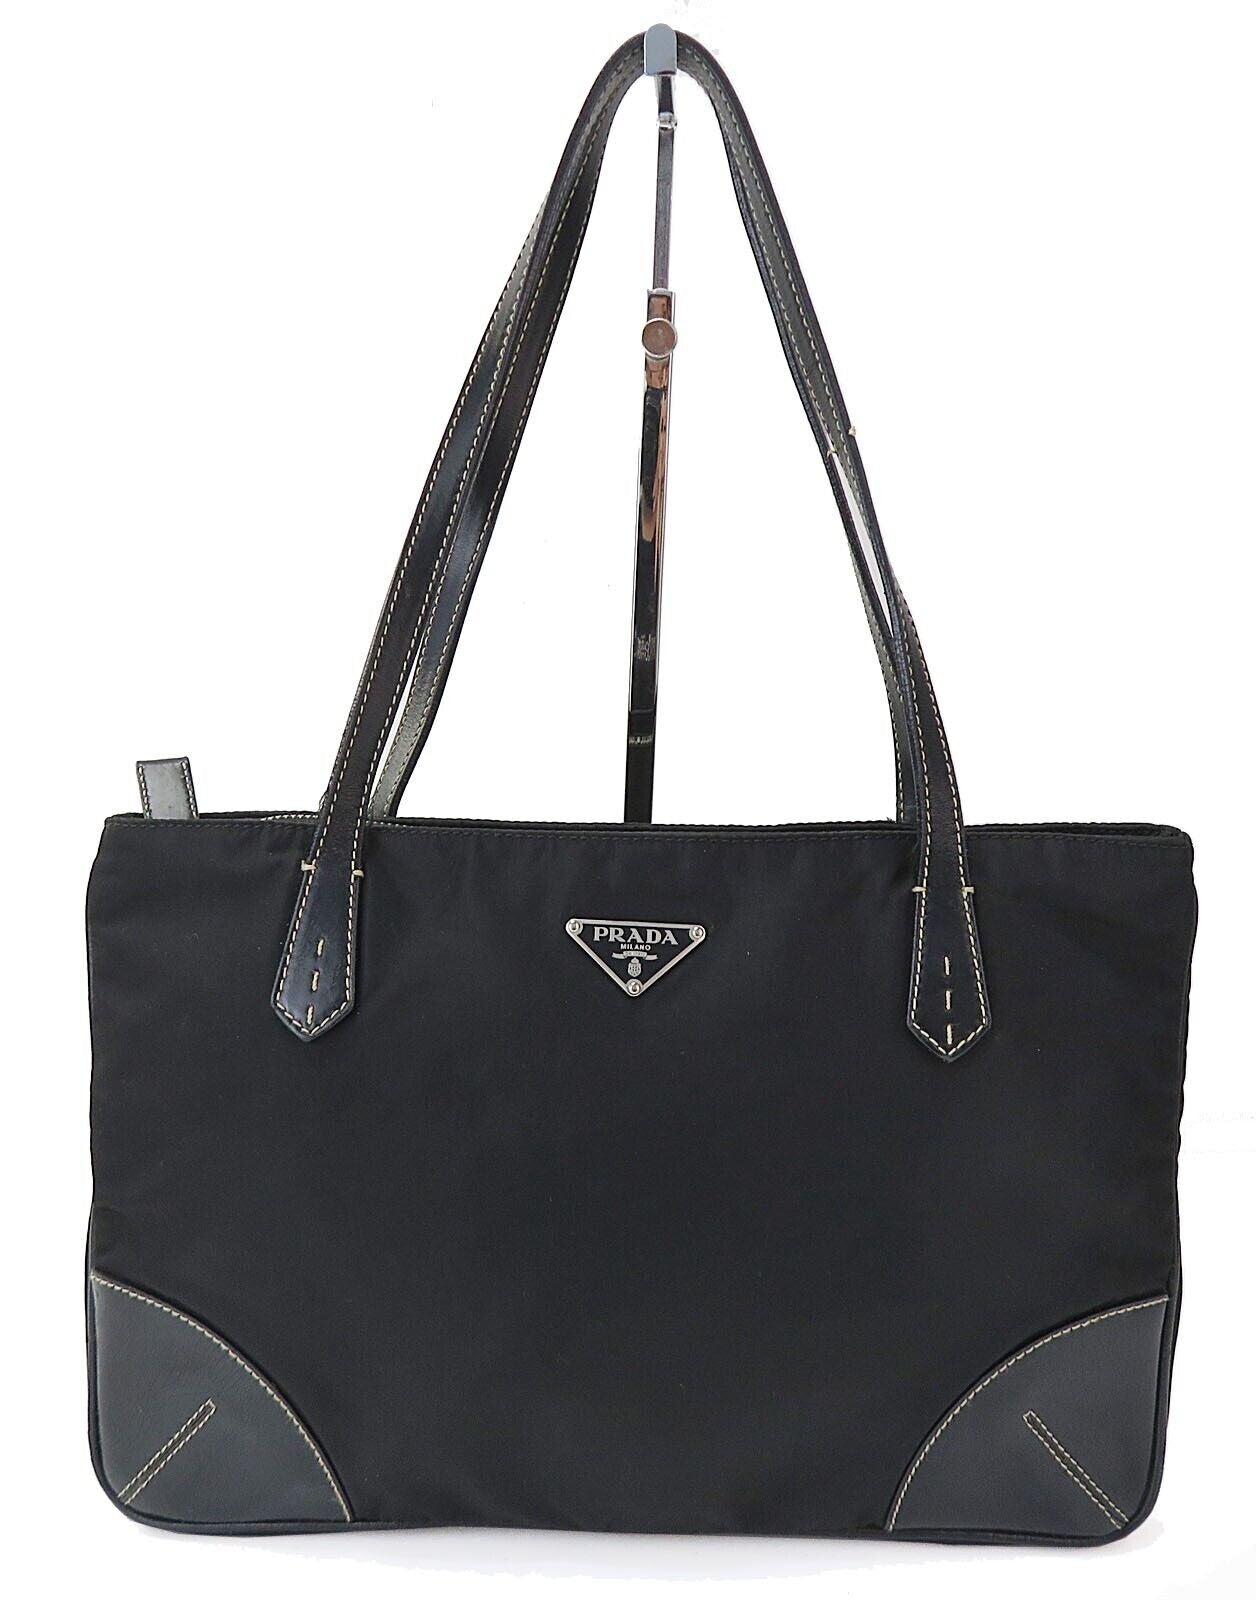 PRADA Milano Black Nylon and Leather Tote Bag